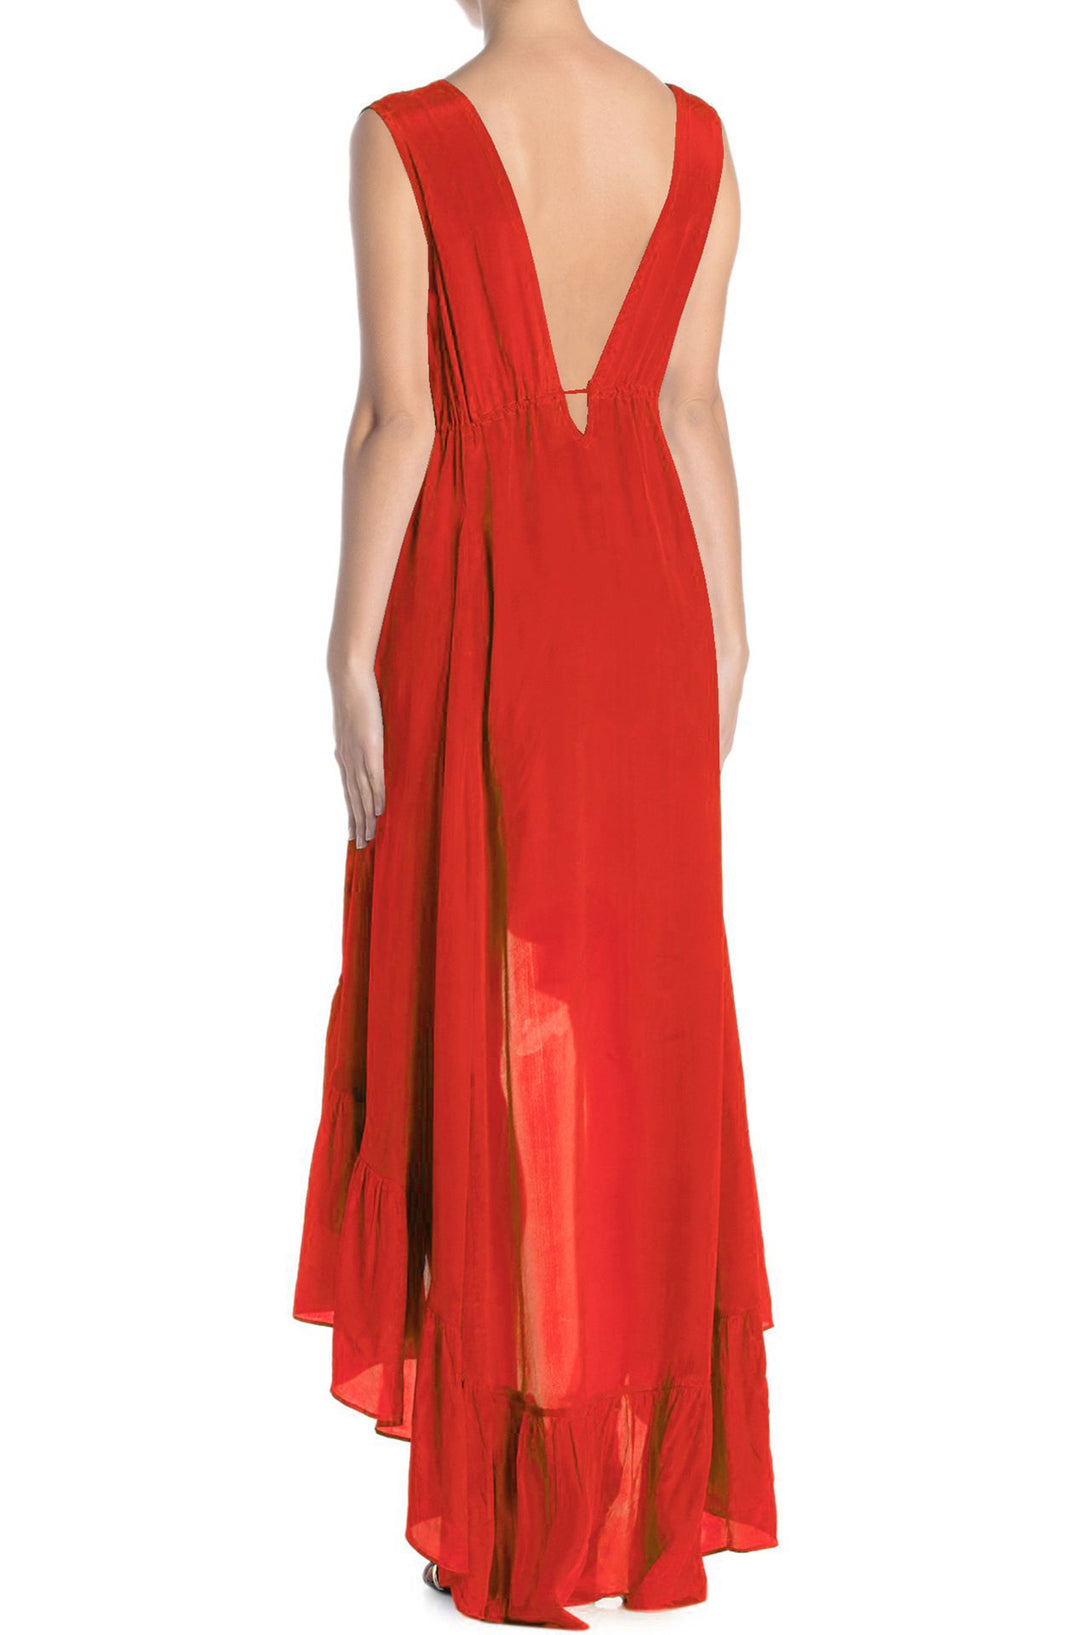  orange maxi dresses for women, summer maxi dresses for women, plunging v neck formal dress,